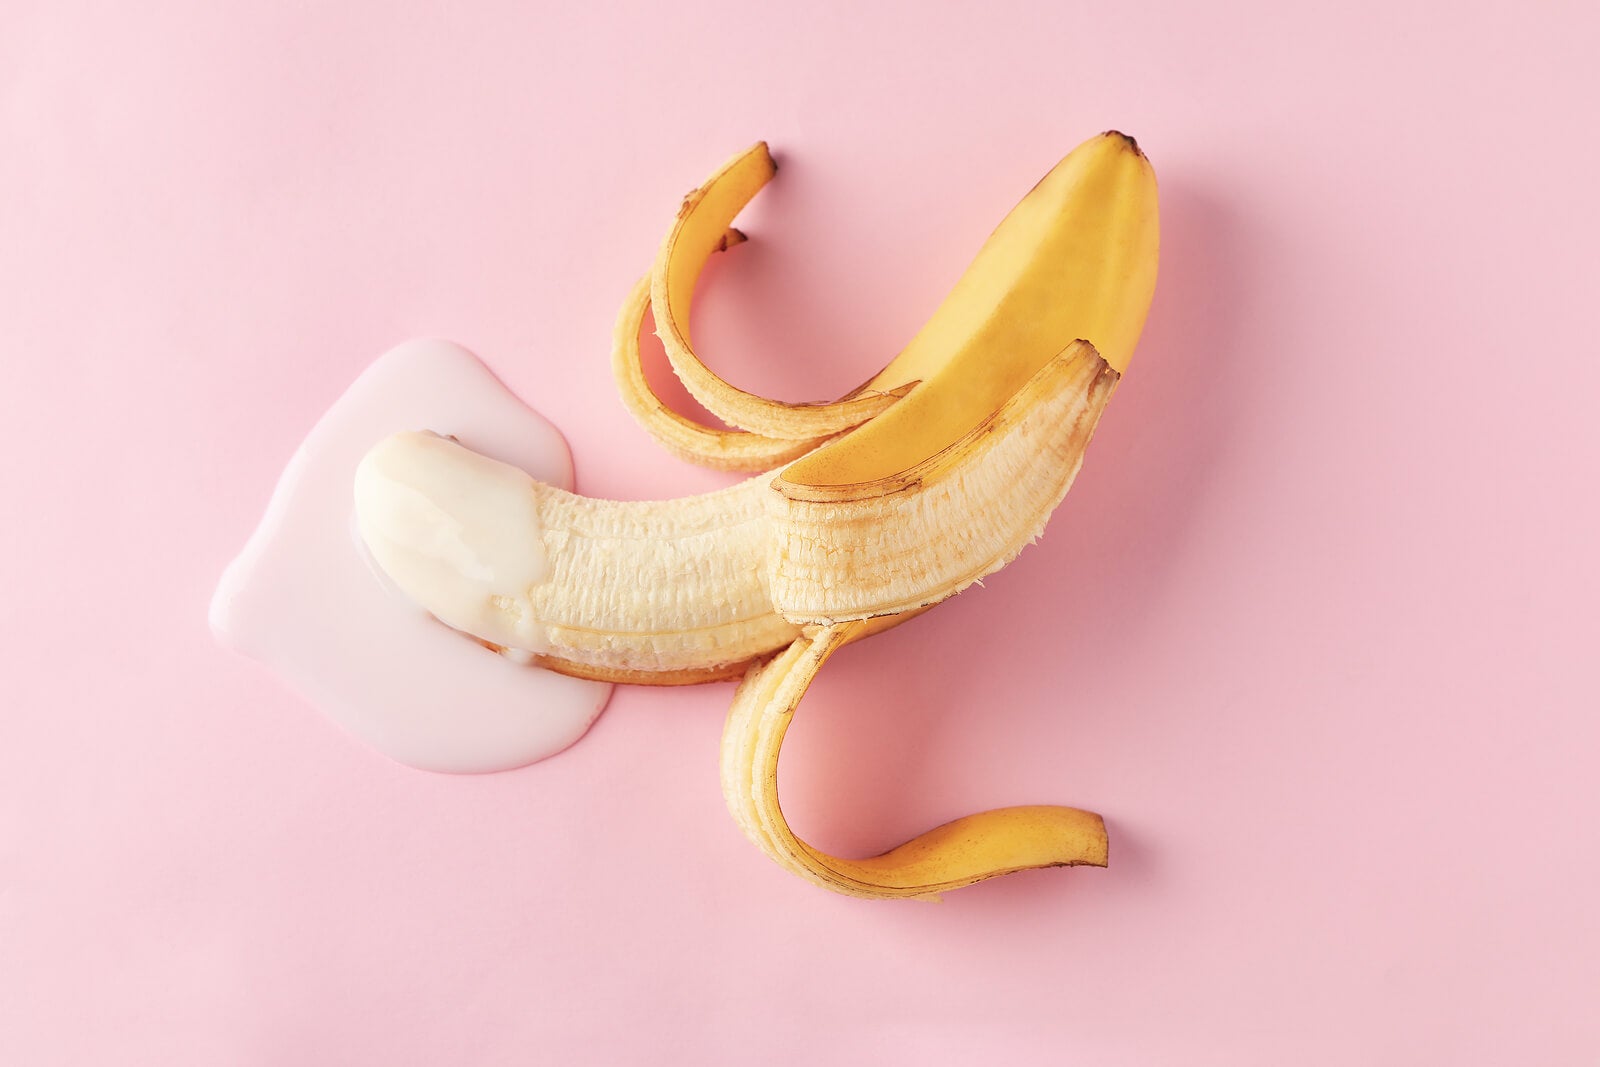 Banana representando el concepto de eyaculación.